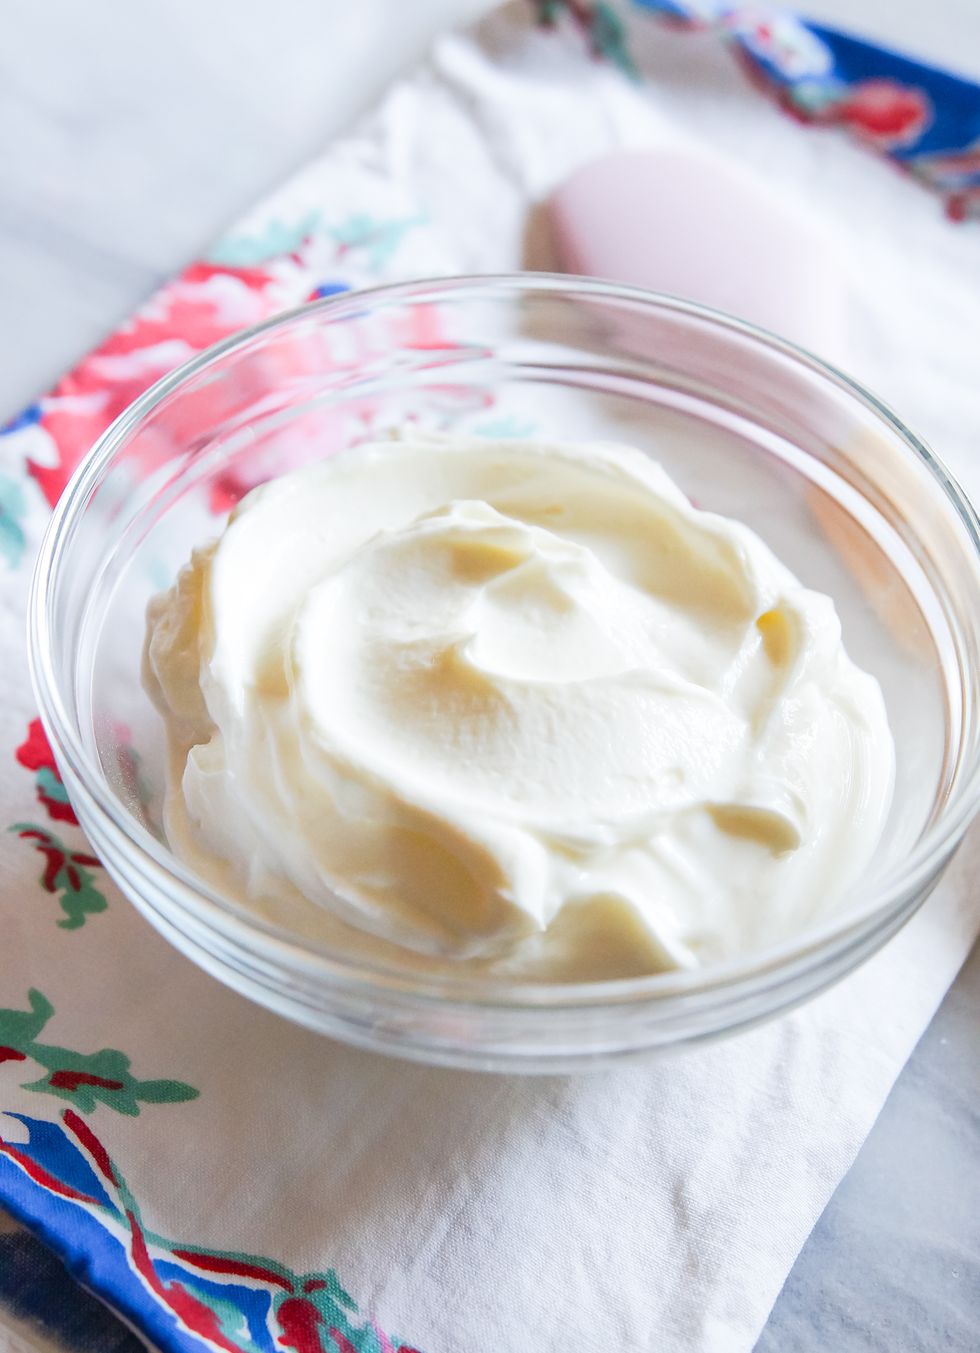 How to Bake with Greek Yogurt